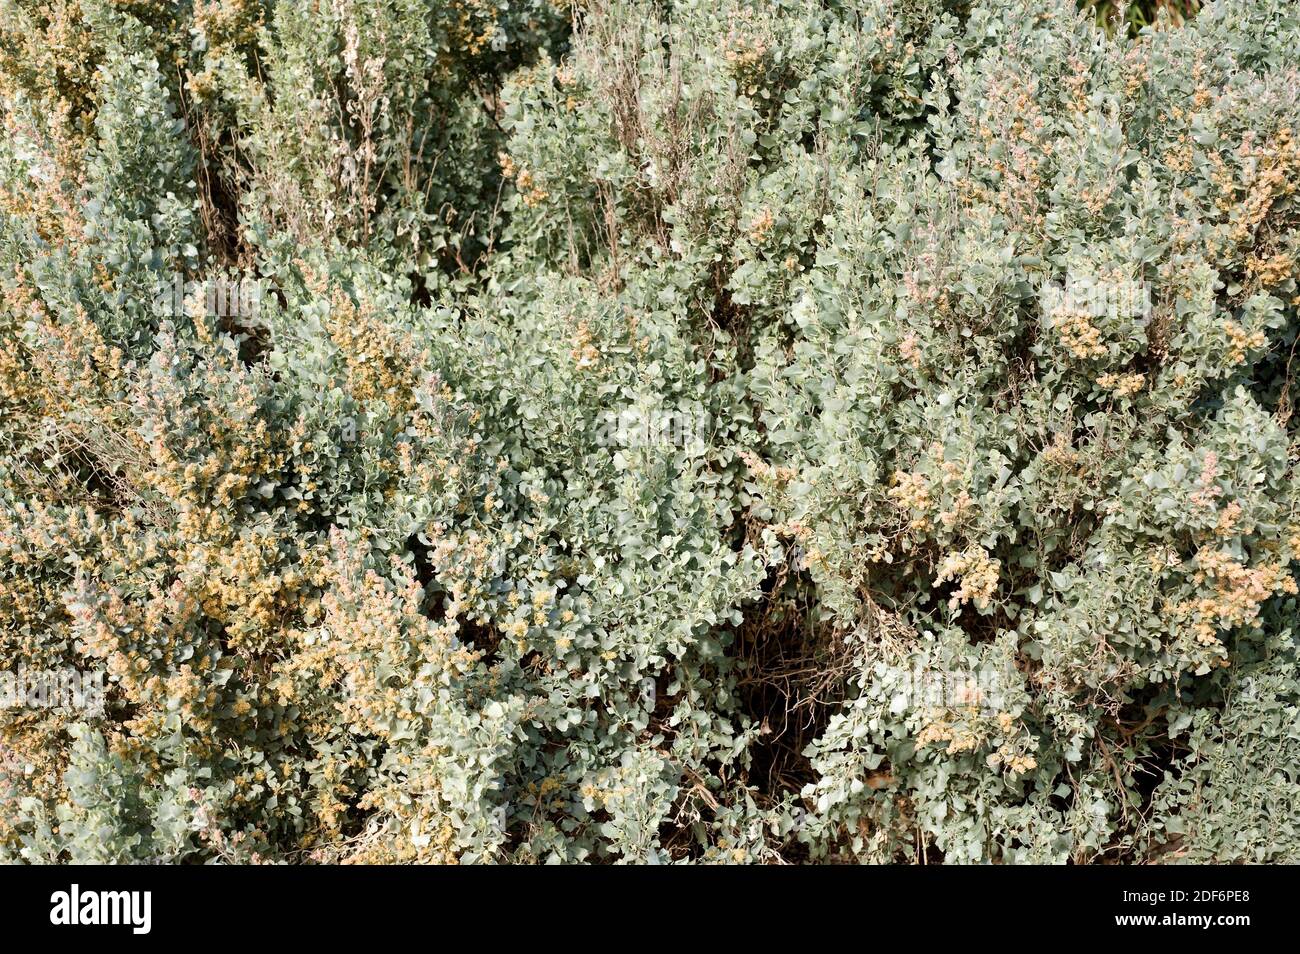 Oldman saltbush (Atriplex nummularia) is an halophyte shrub native to arid regions of Australia. Stock Photo